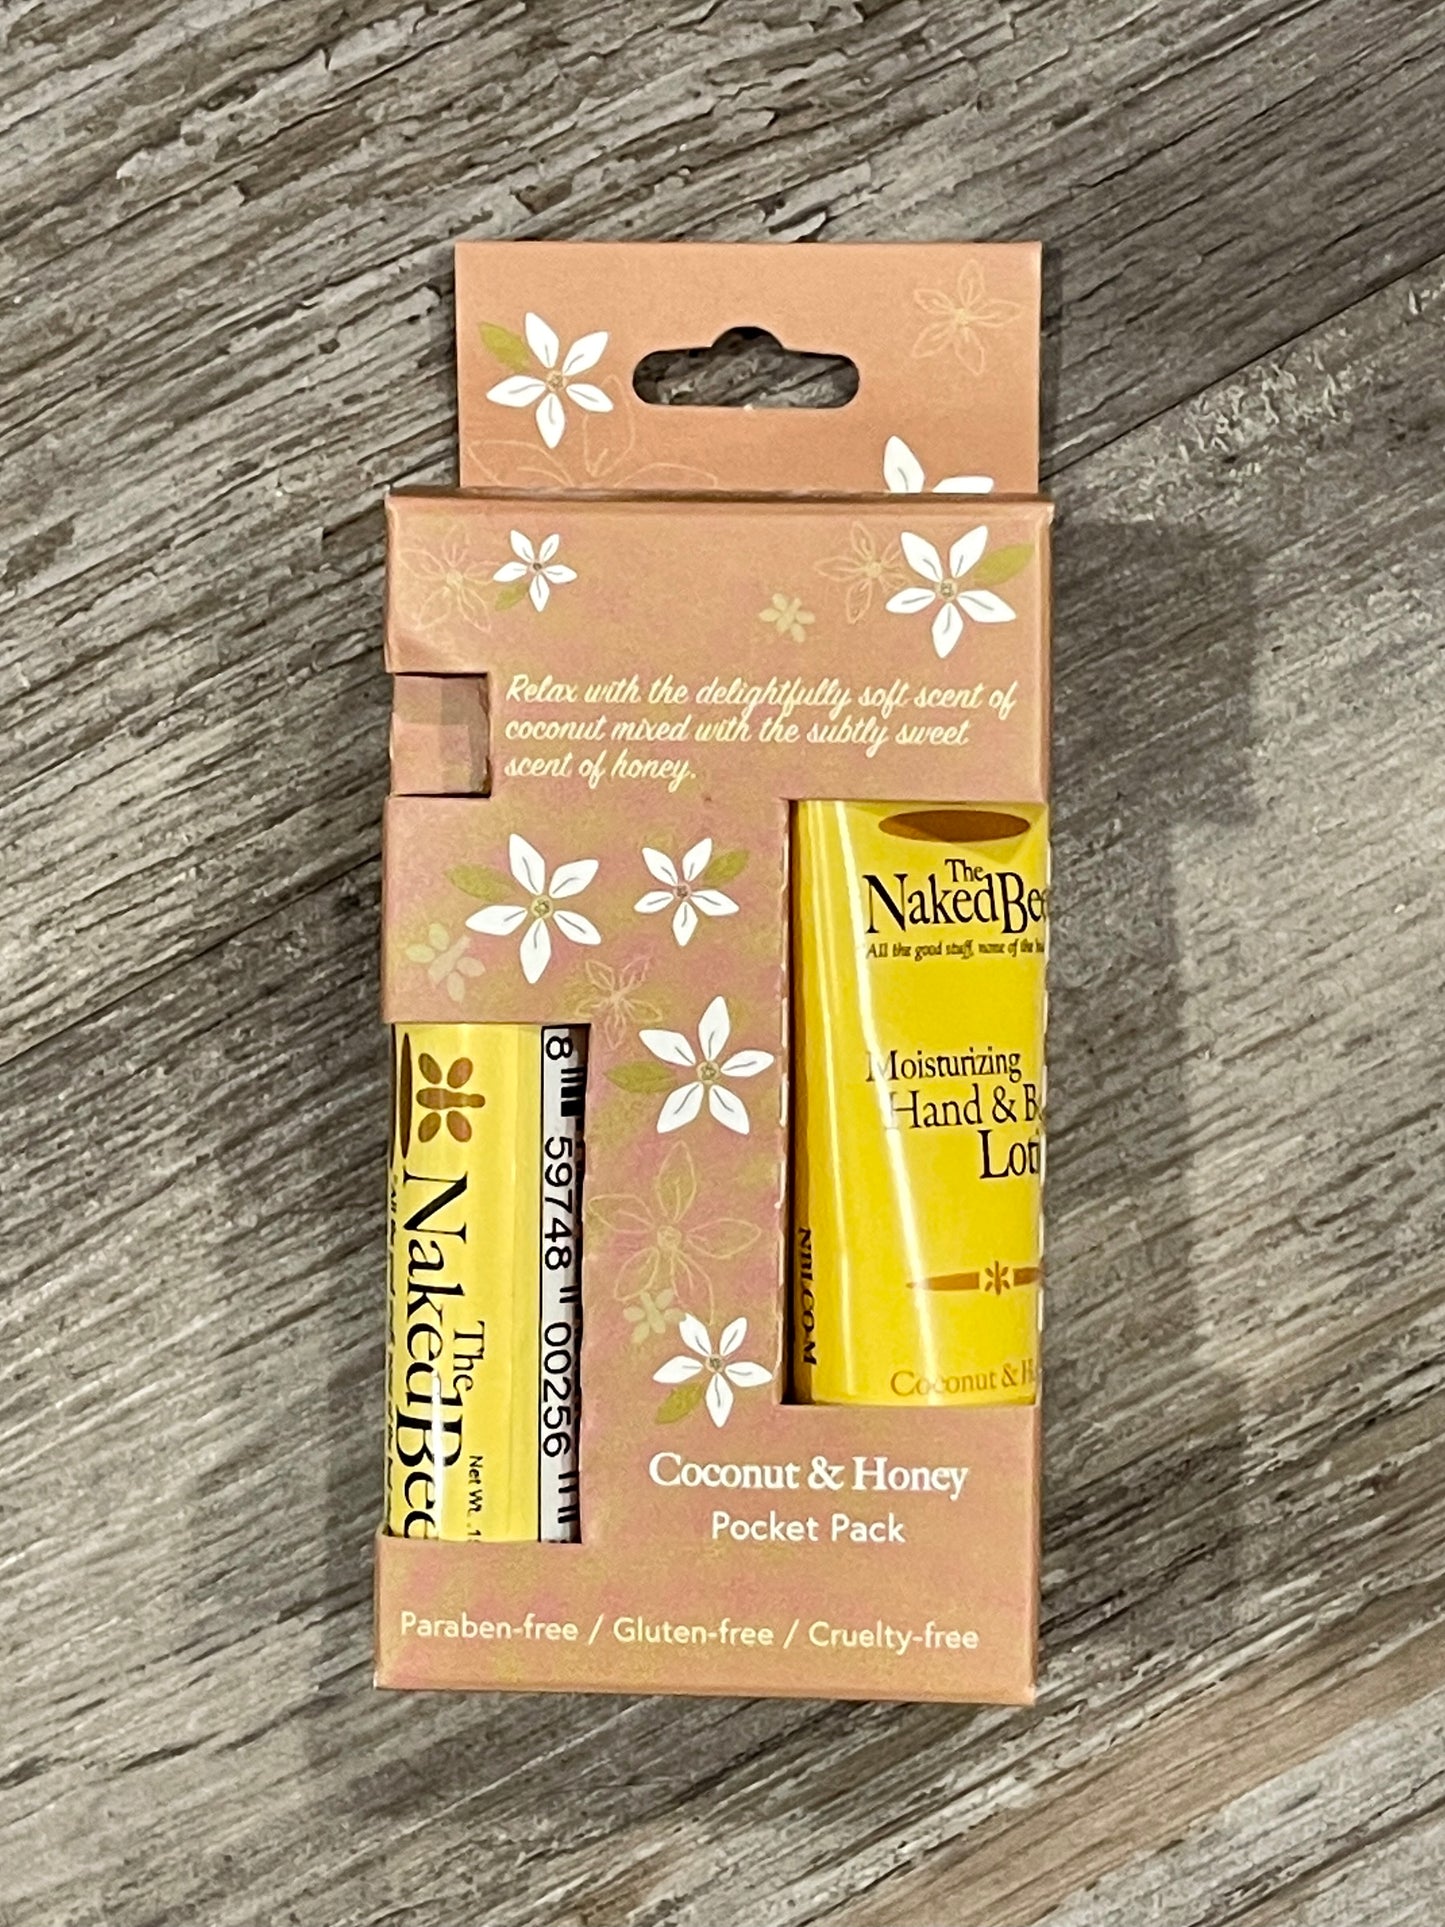 Naked Bee Pocket Pack